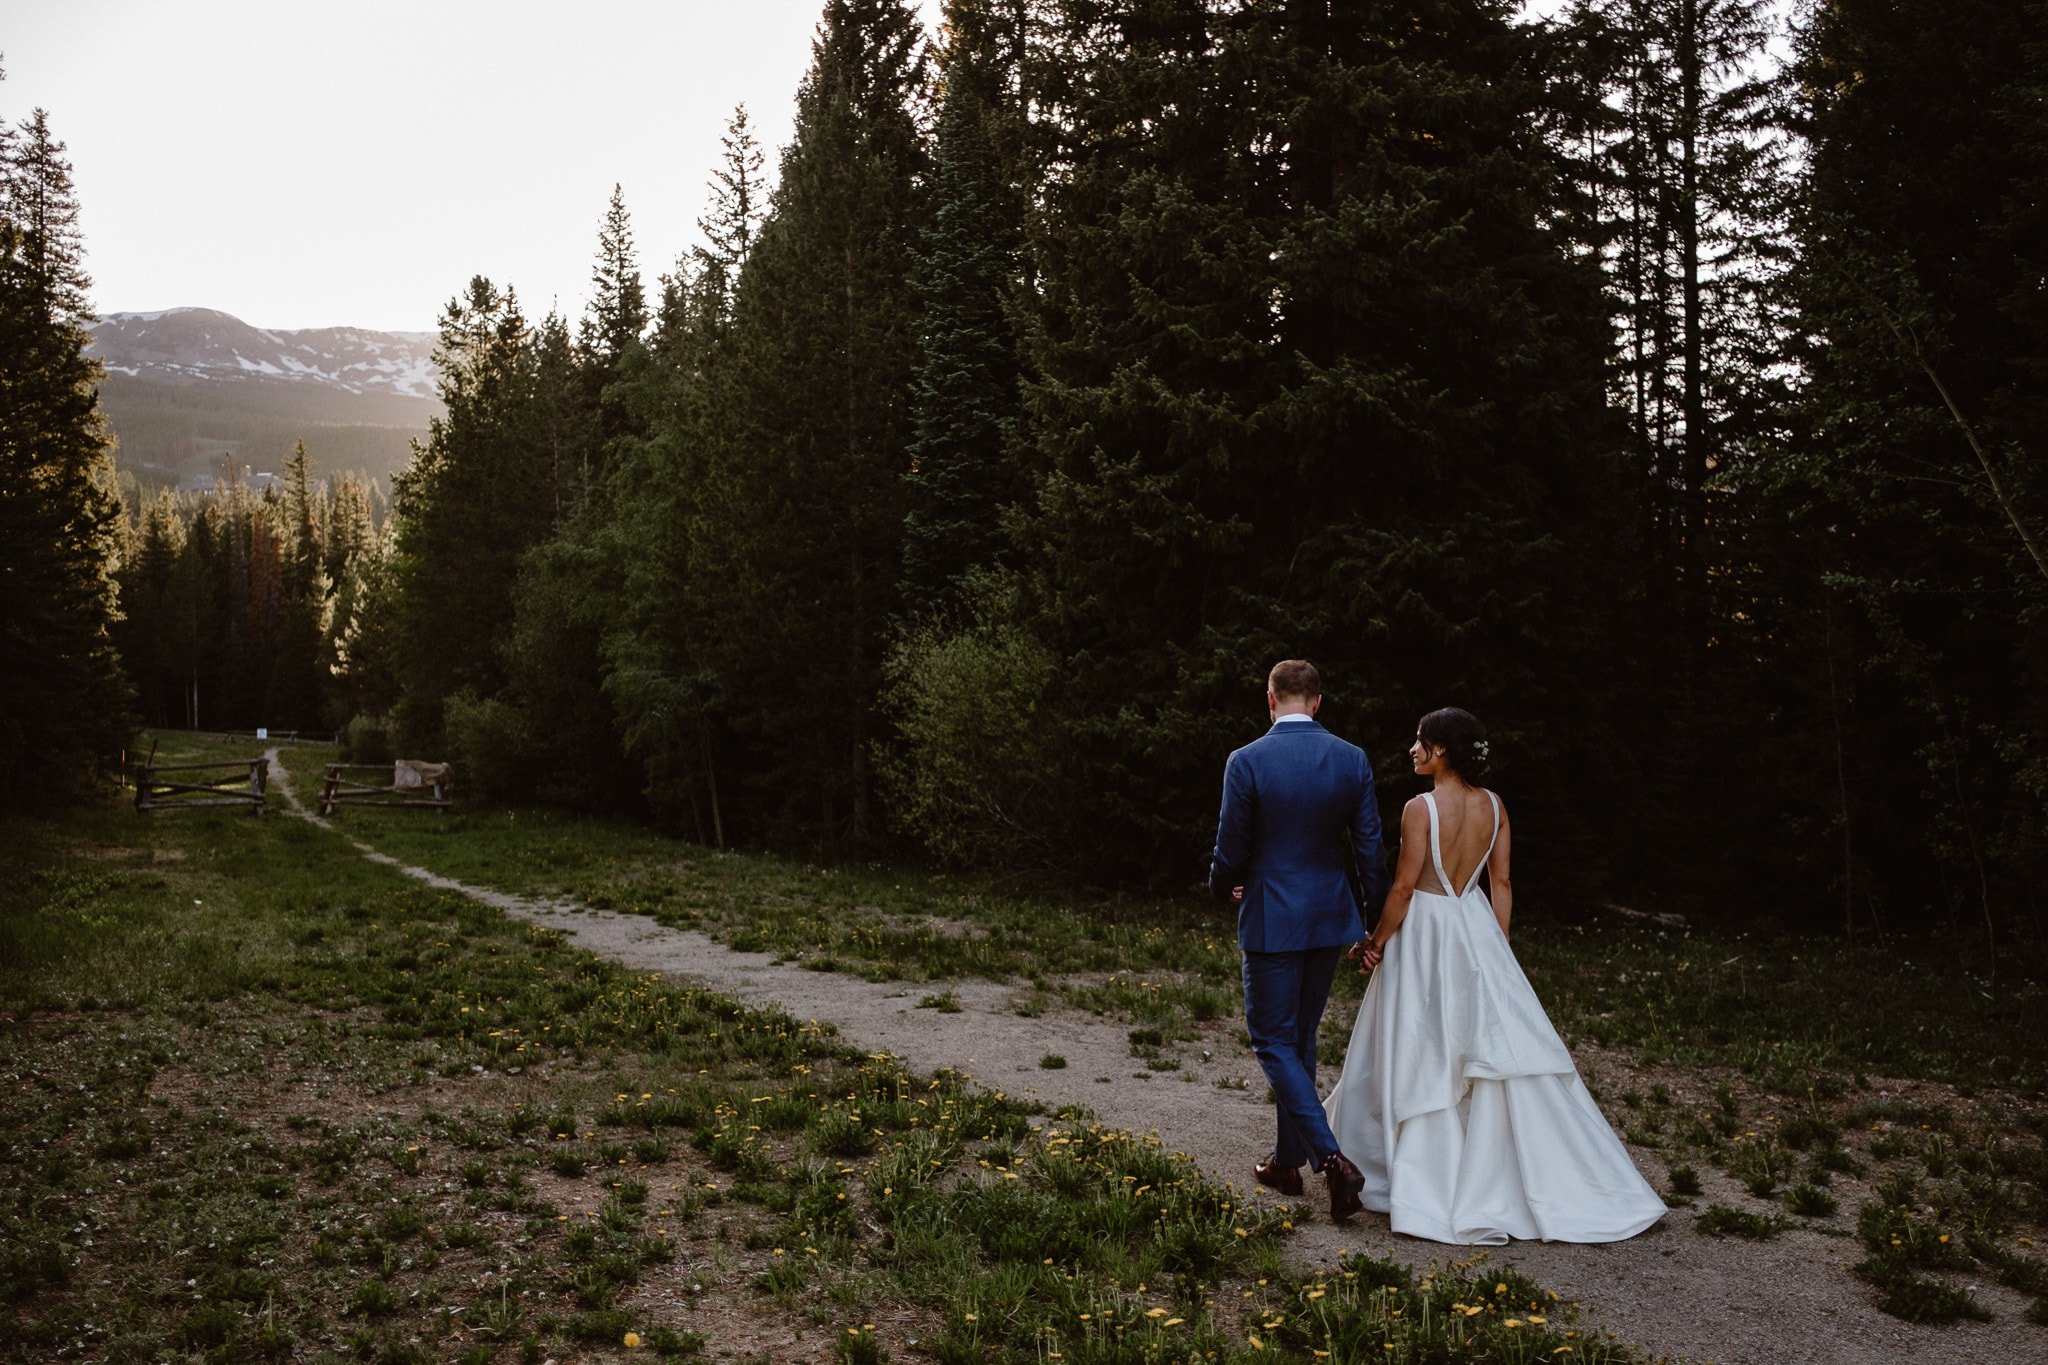 Breckenridge Nordic Center Wedding Photographer, bride and groom portraits in woods at golden hour, Summit County wedding photographer